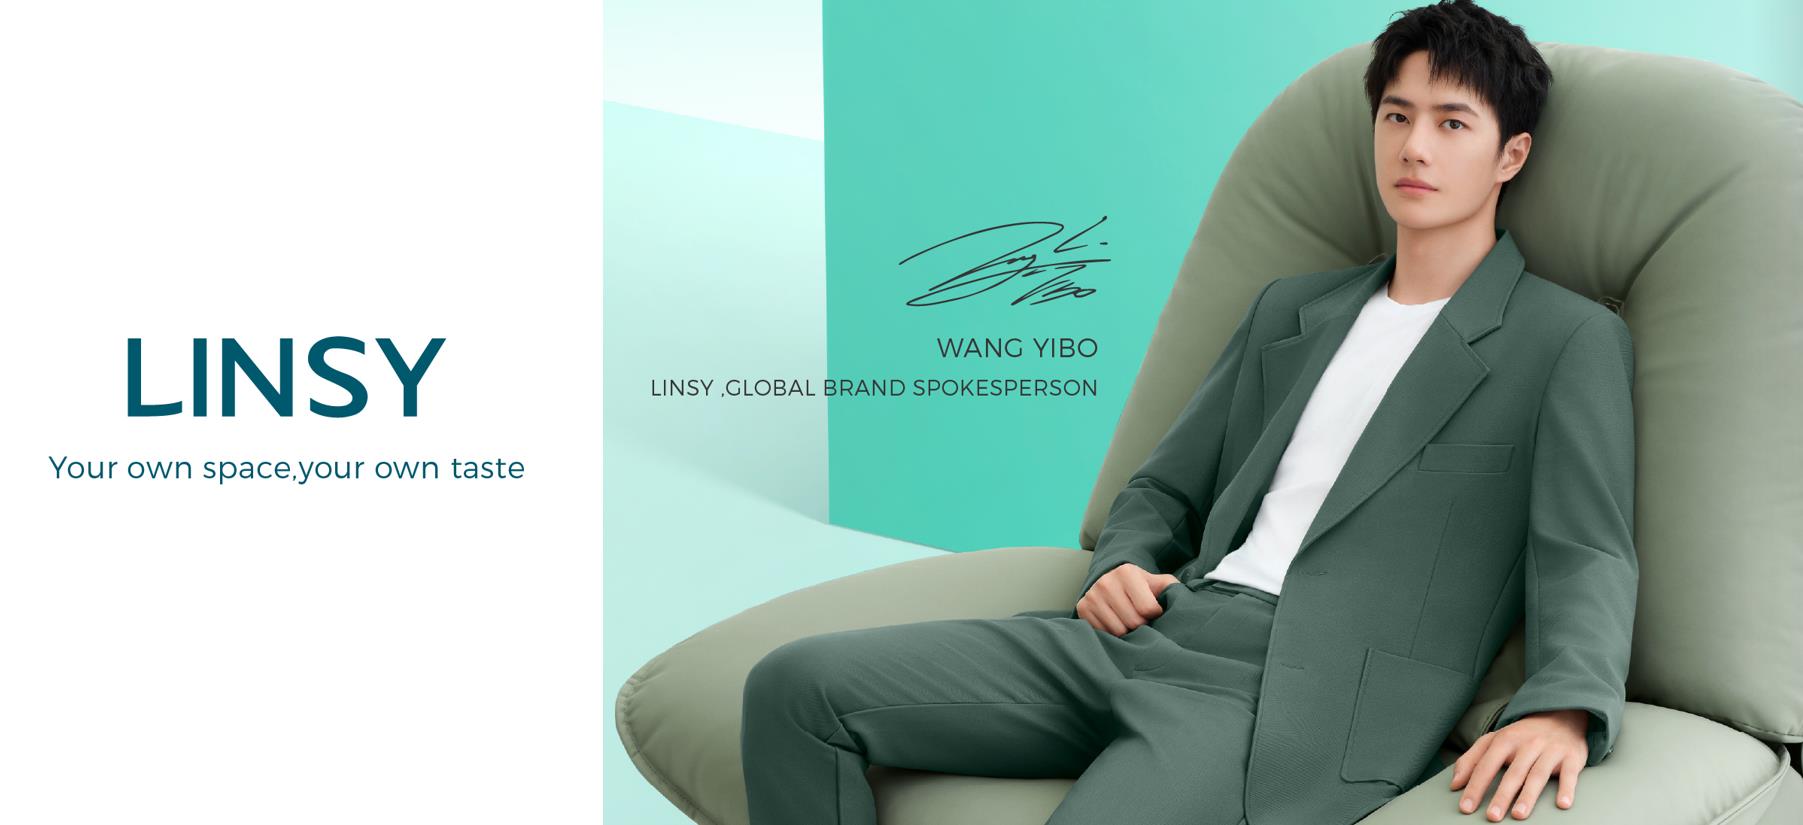 WANG YIBO、LINSY グローバル ブランド スポークスパーソン
